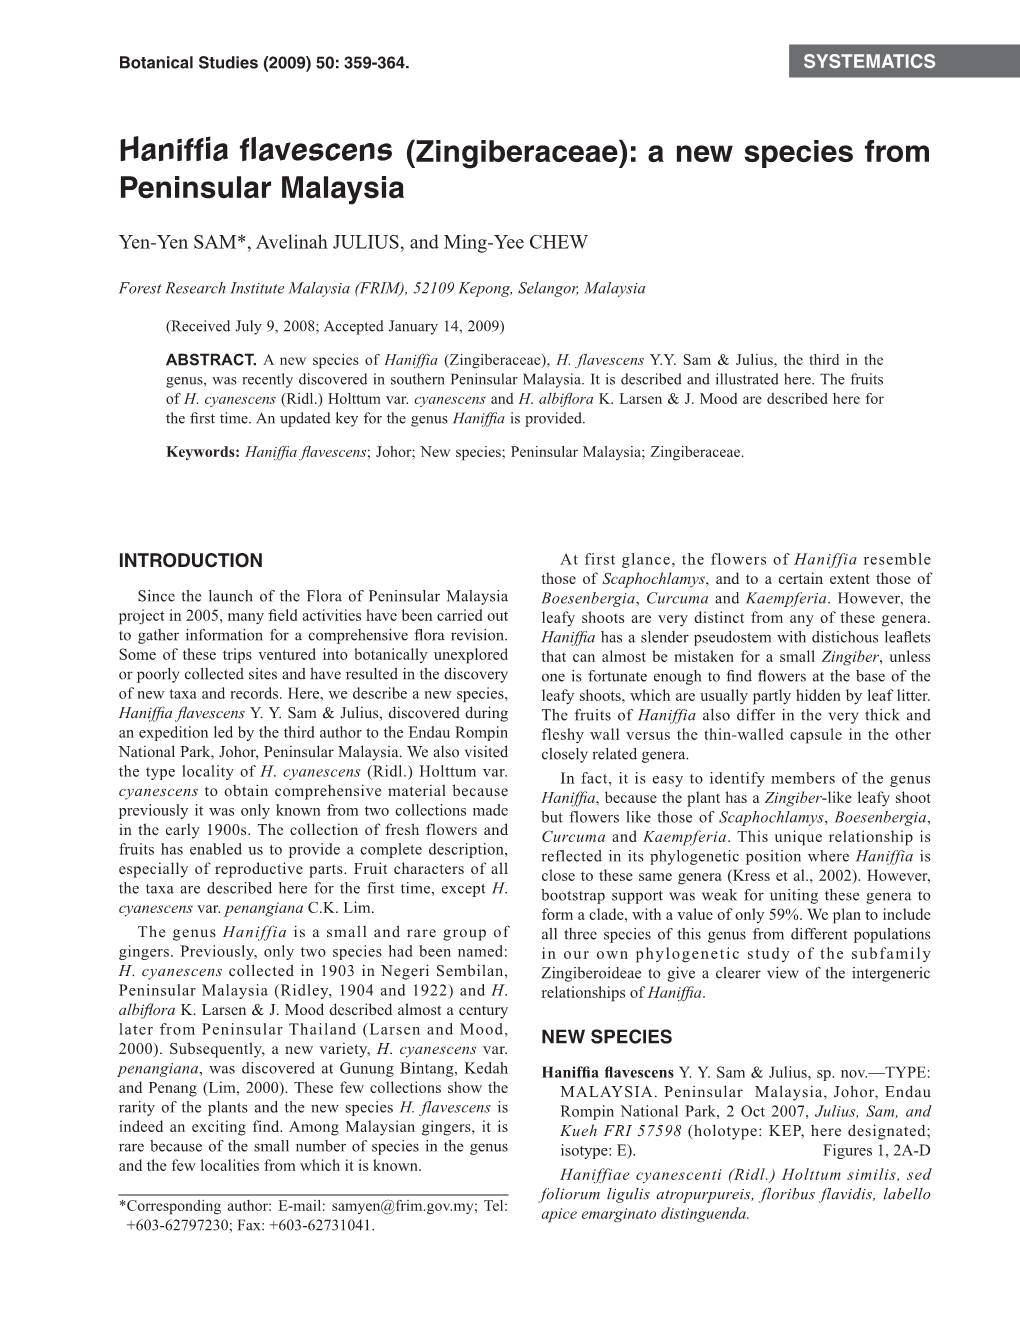 Haniffia Flavescens (Zingiberaceae): a New Species from Peninsular Malaysia